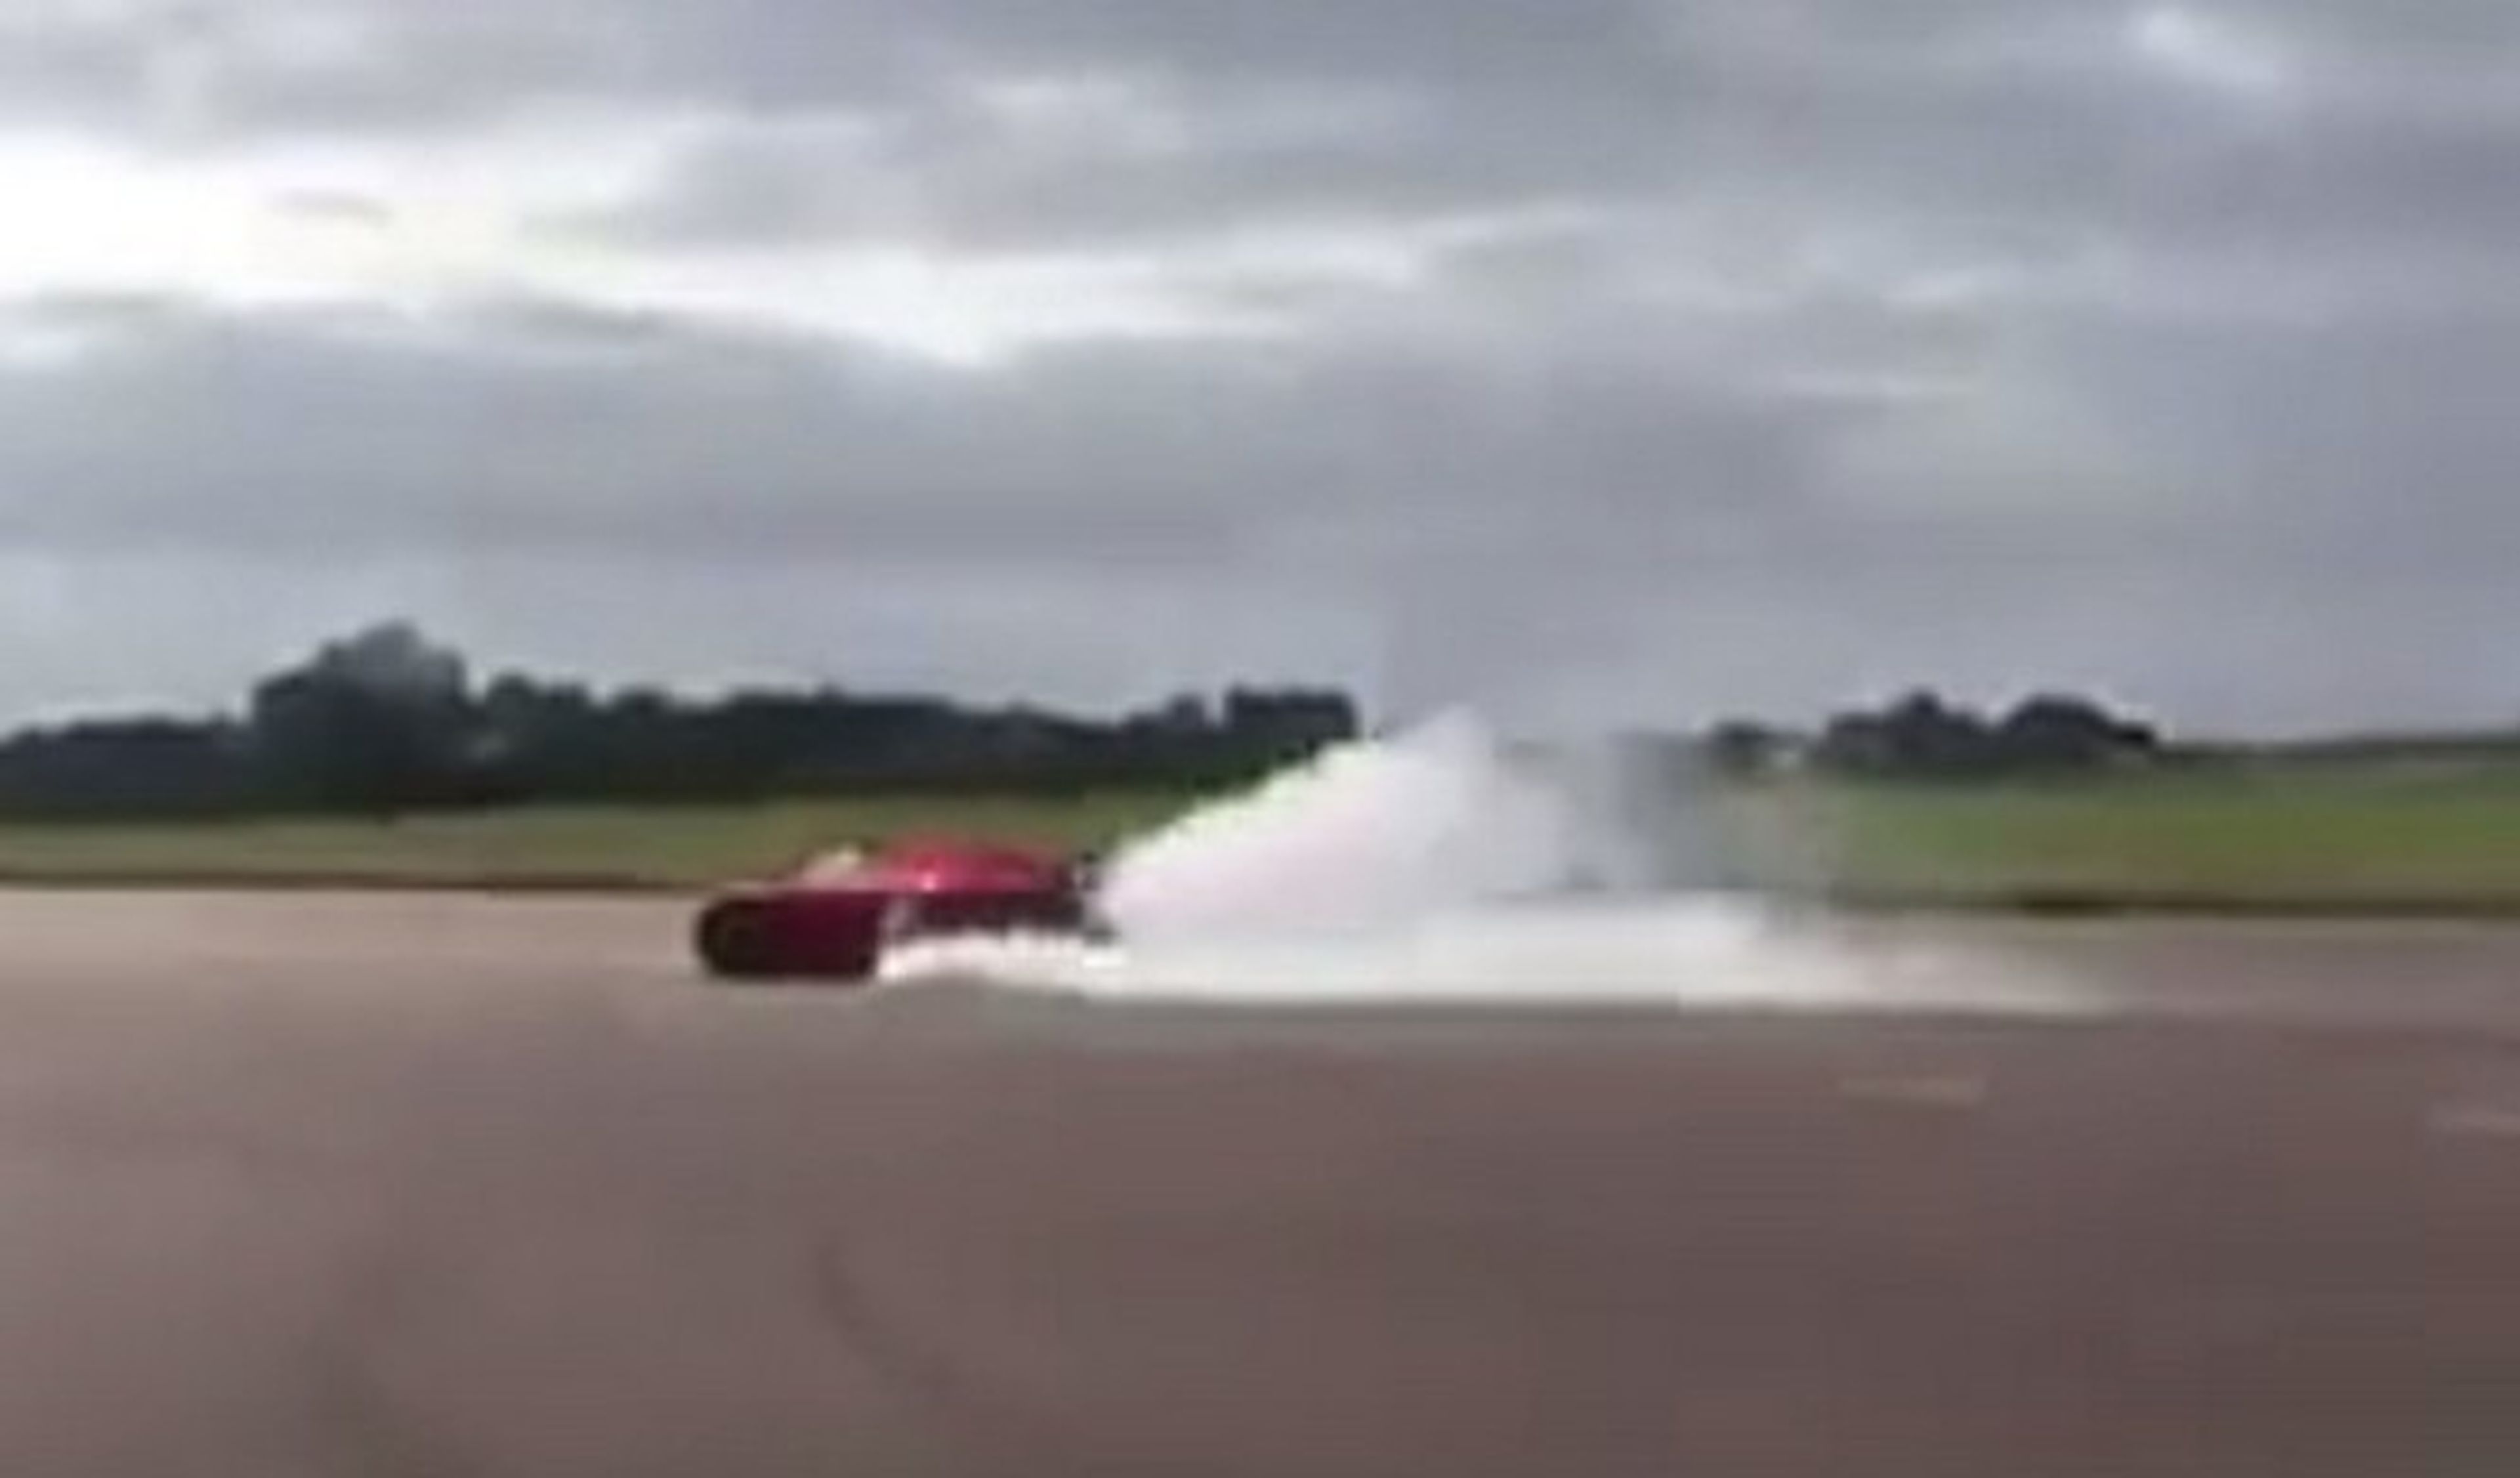 Sí, el Koenigsegg Regera quema ruedas que da gusto